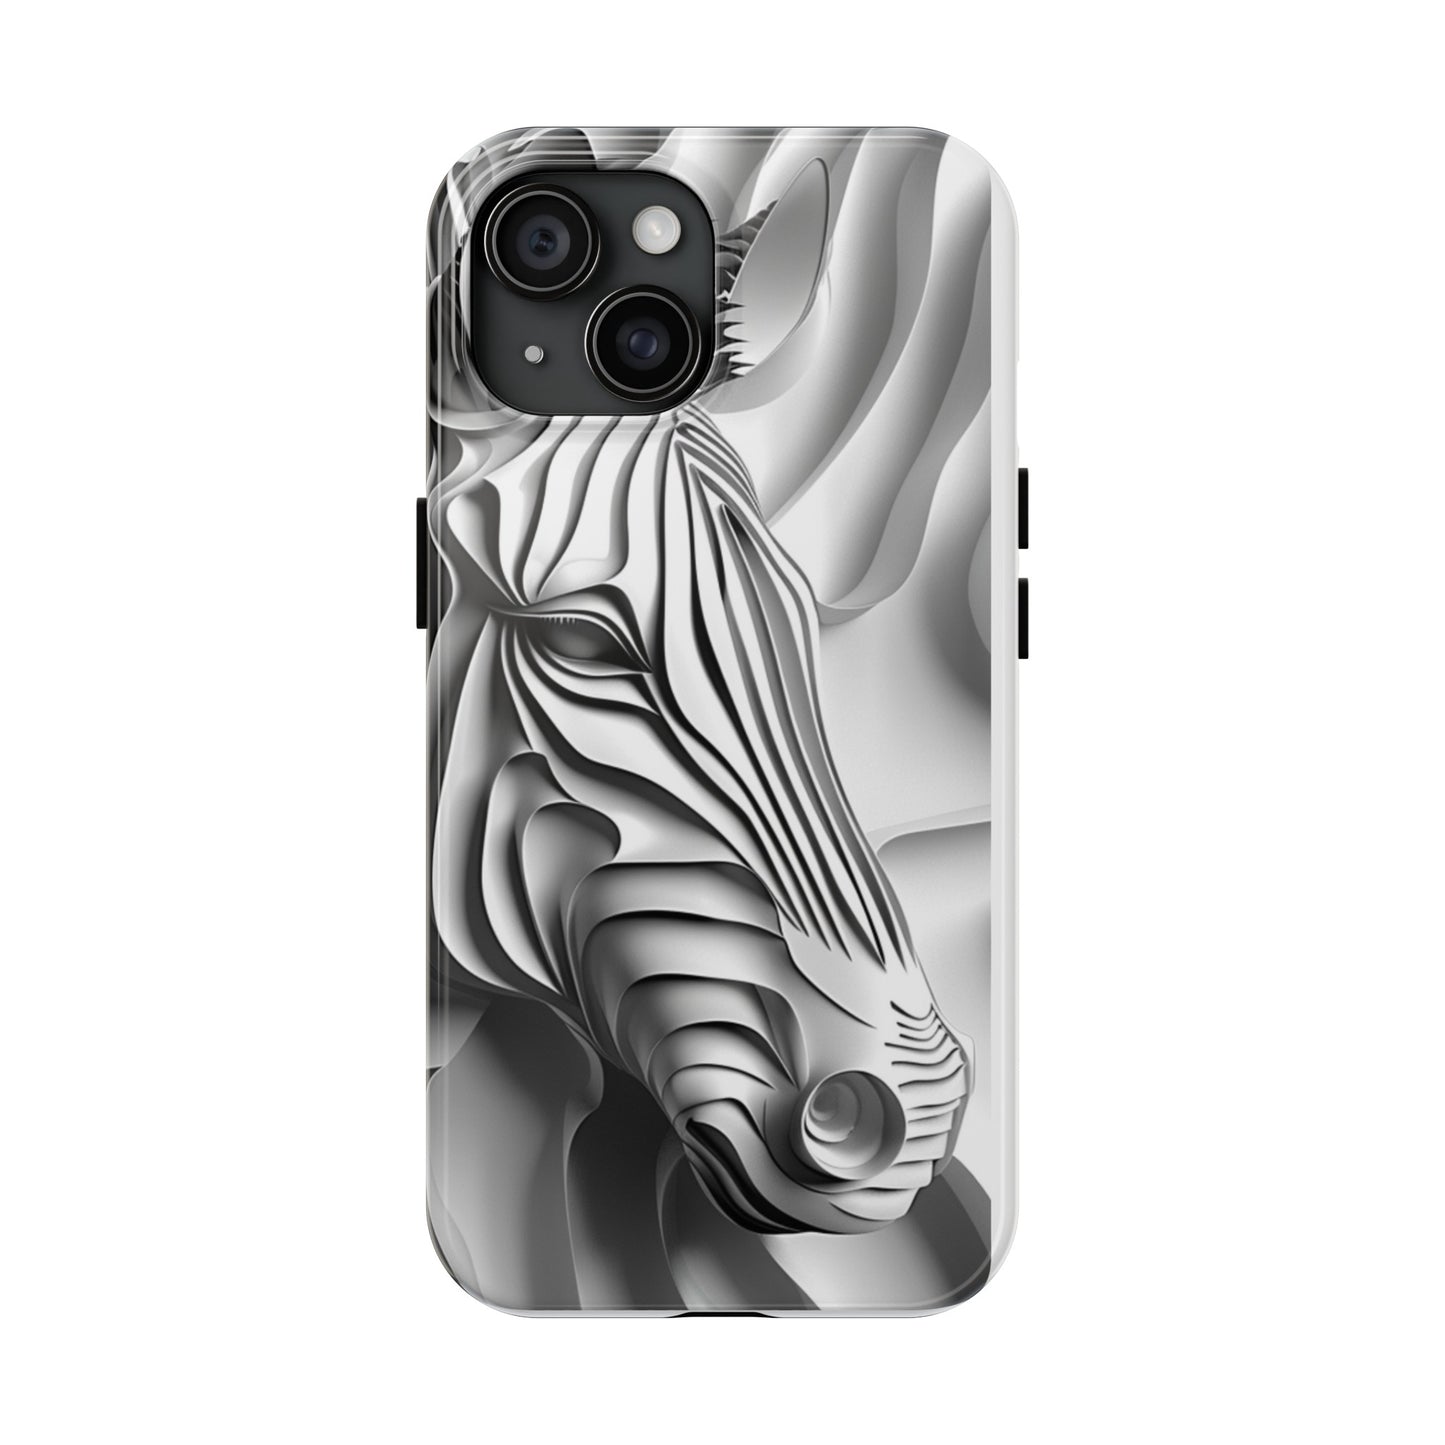 3D Sophisticated Featuring an Elegant Zebra Pattern in Monochrome"